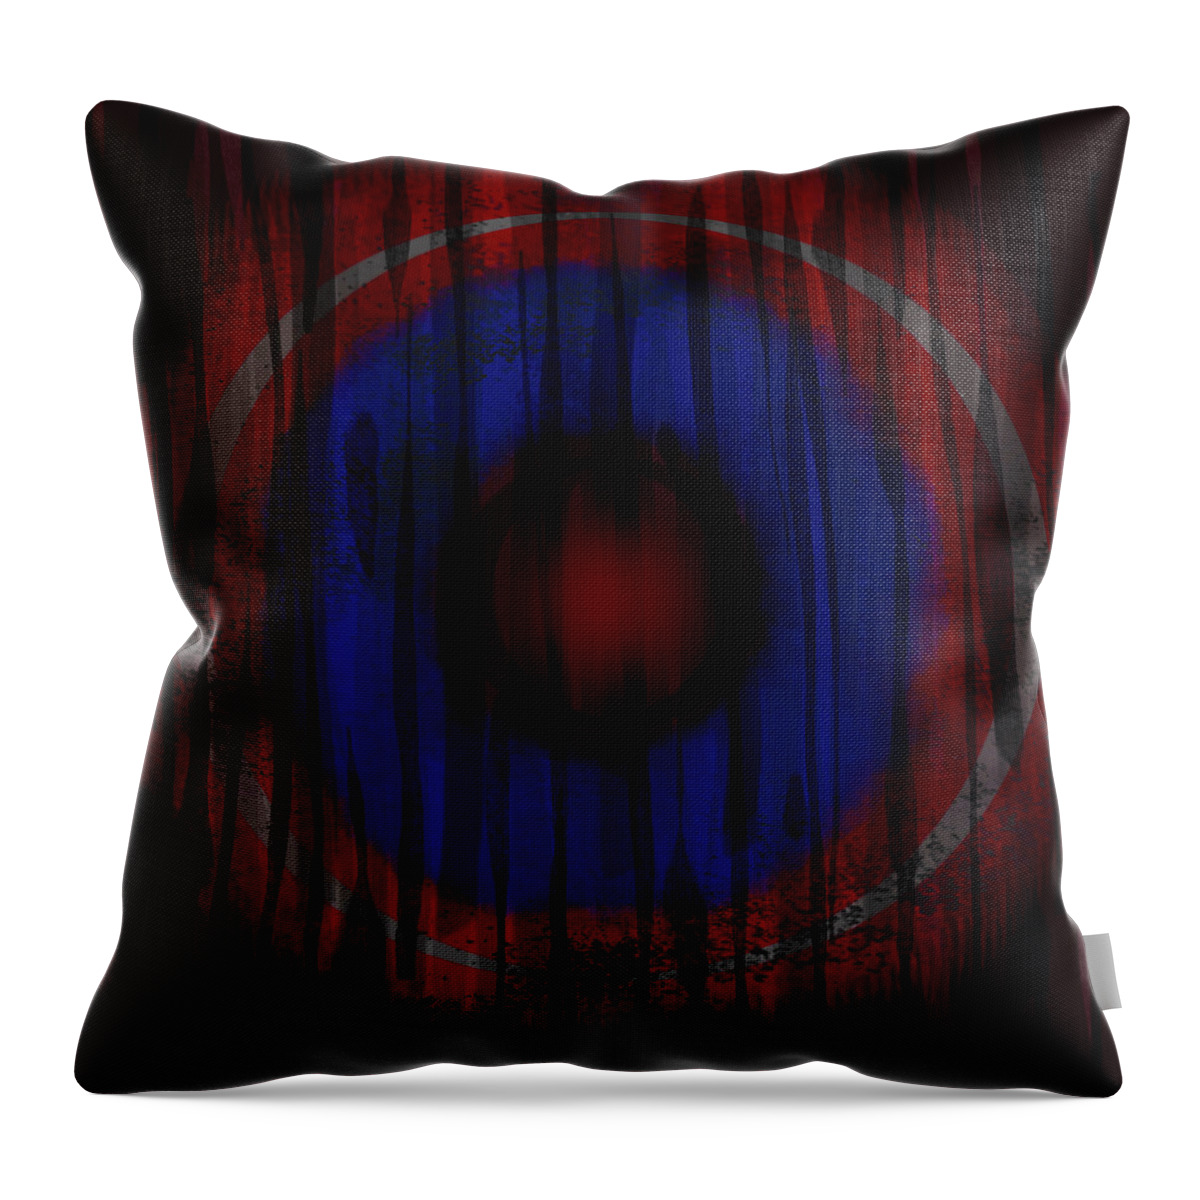 Orbital Throw Pillow featuring the digital art Orbital by Creative Spirit